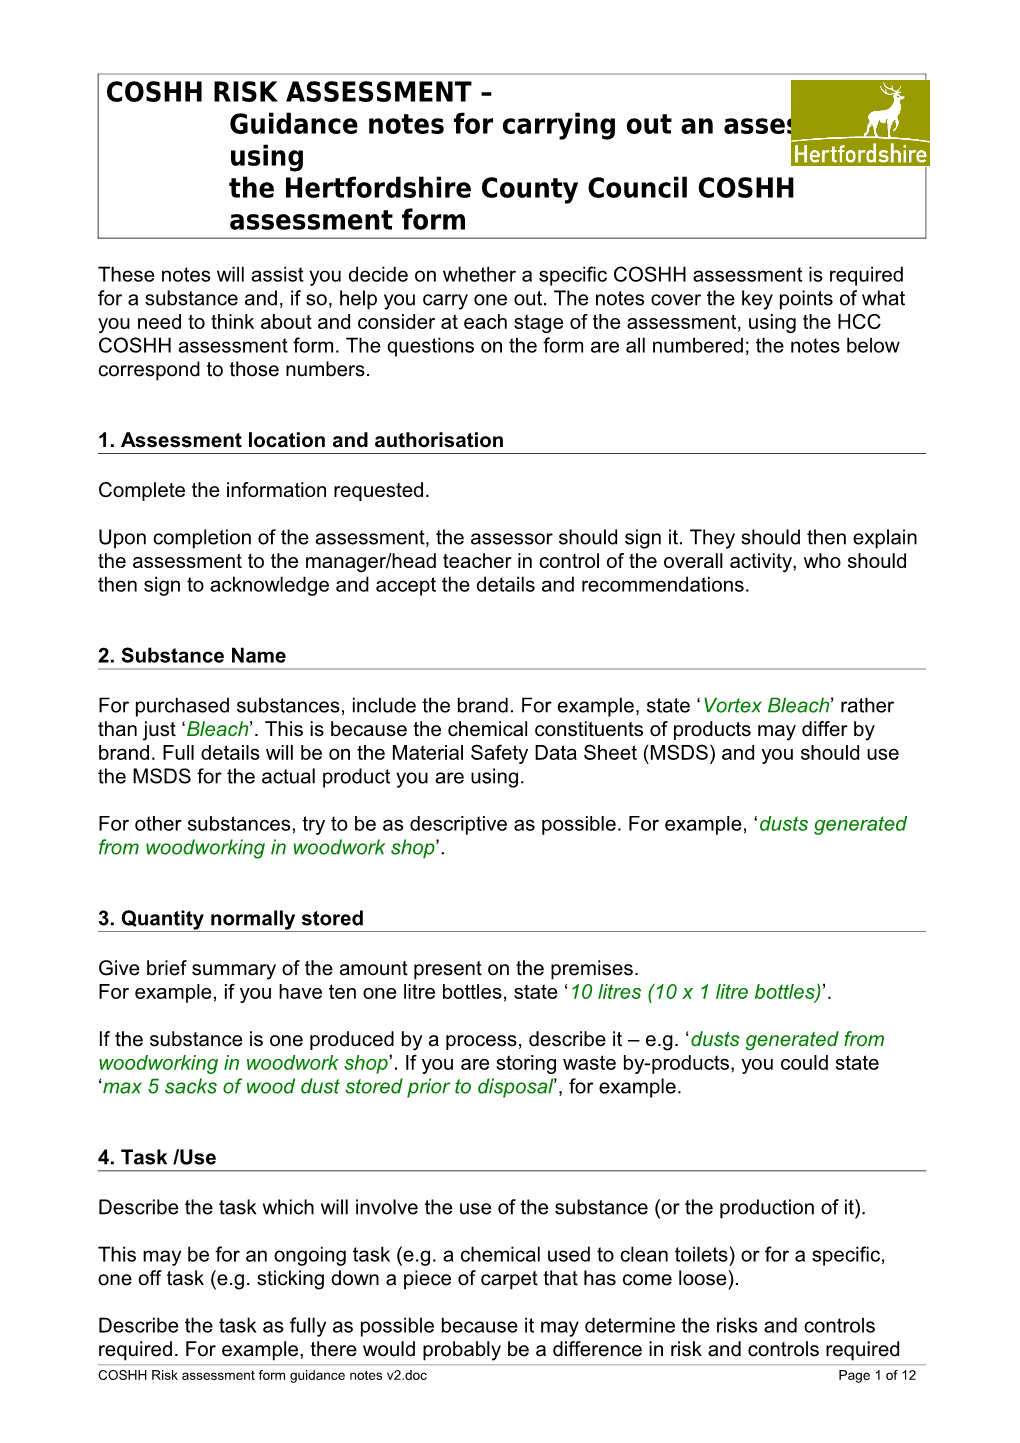 COSHH Risk Assessment - Guidance Notes